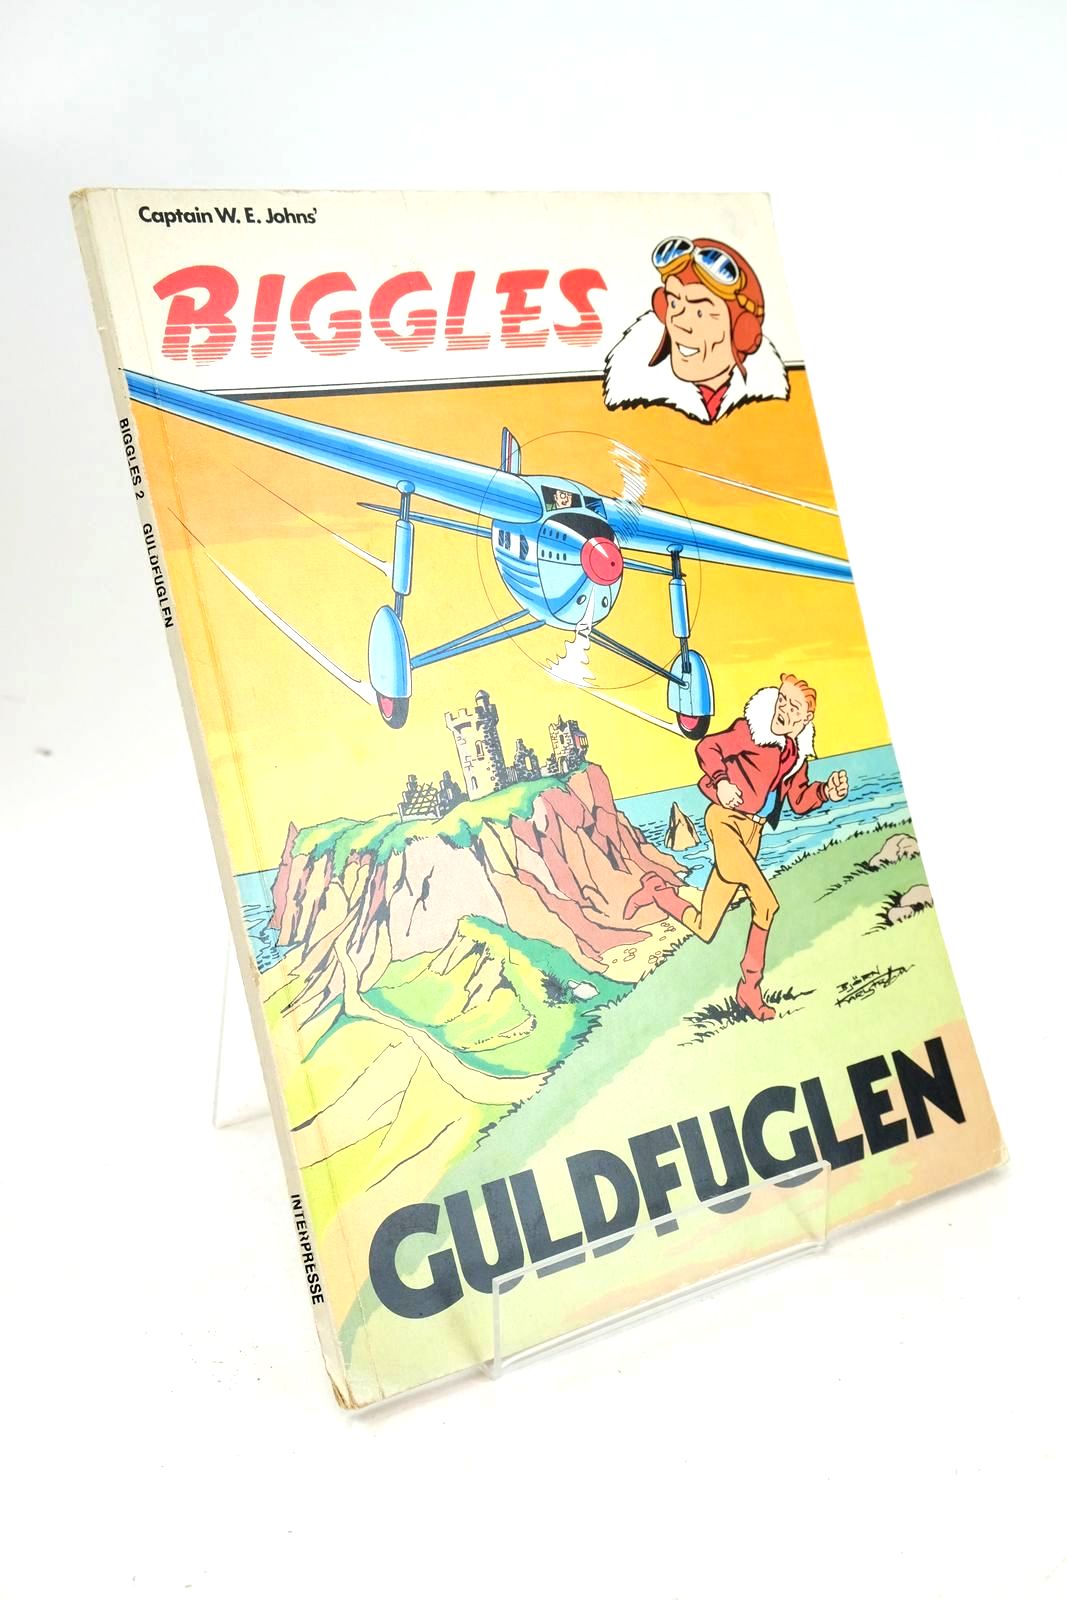 Photo of BIGGLES 2 GULDFUGLEN written by Johns, W.E. Jorgensen, Carmen Jorgensen, John illustrated by Karlstrom, Bjorn published by Interpresse (STOCK CODE: 1326399)  for sale by Stella & Rose's Books